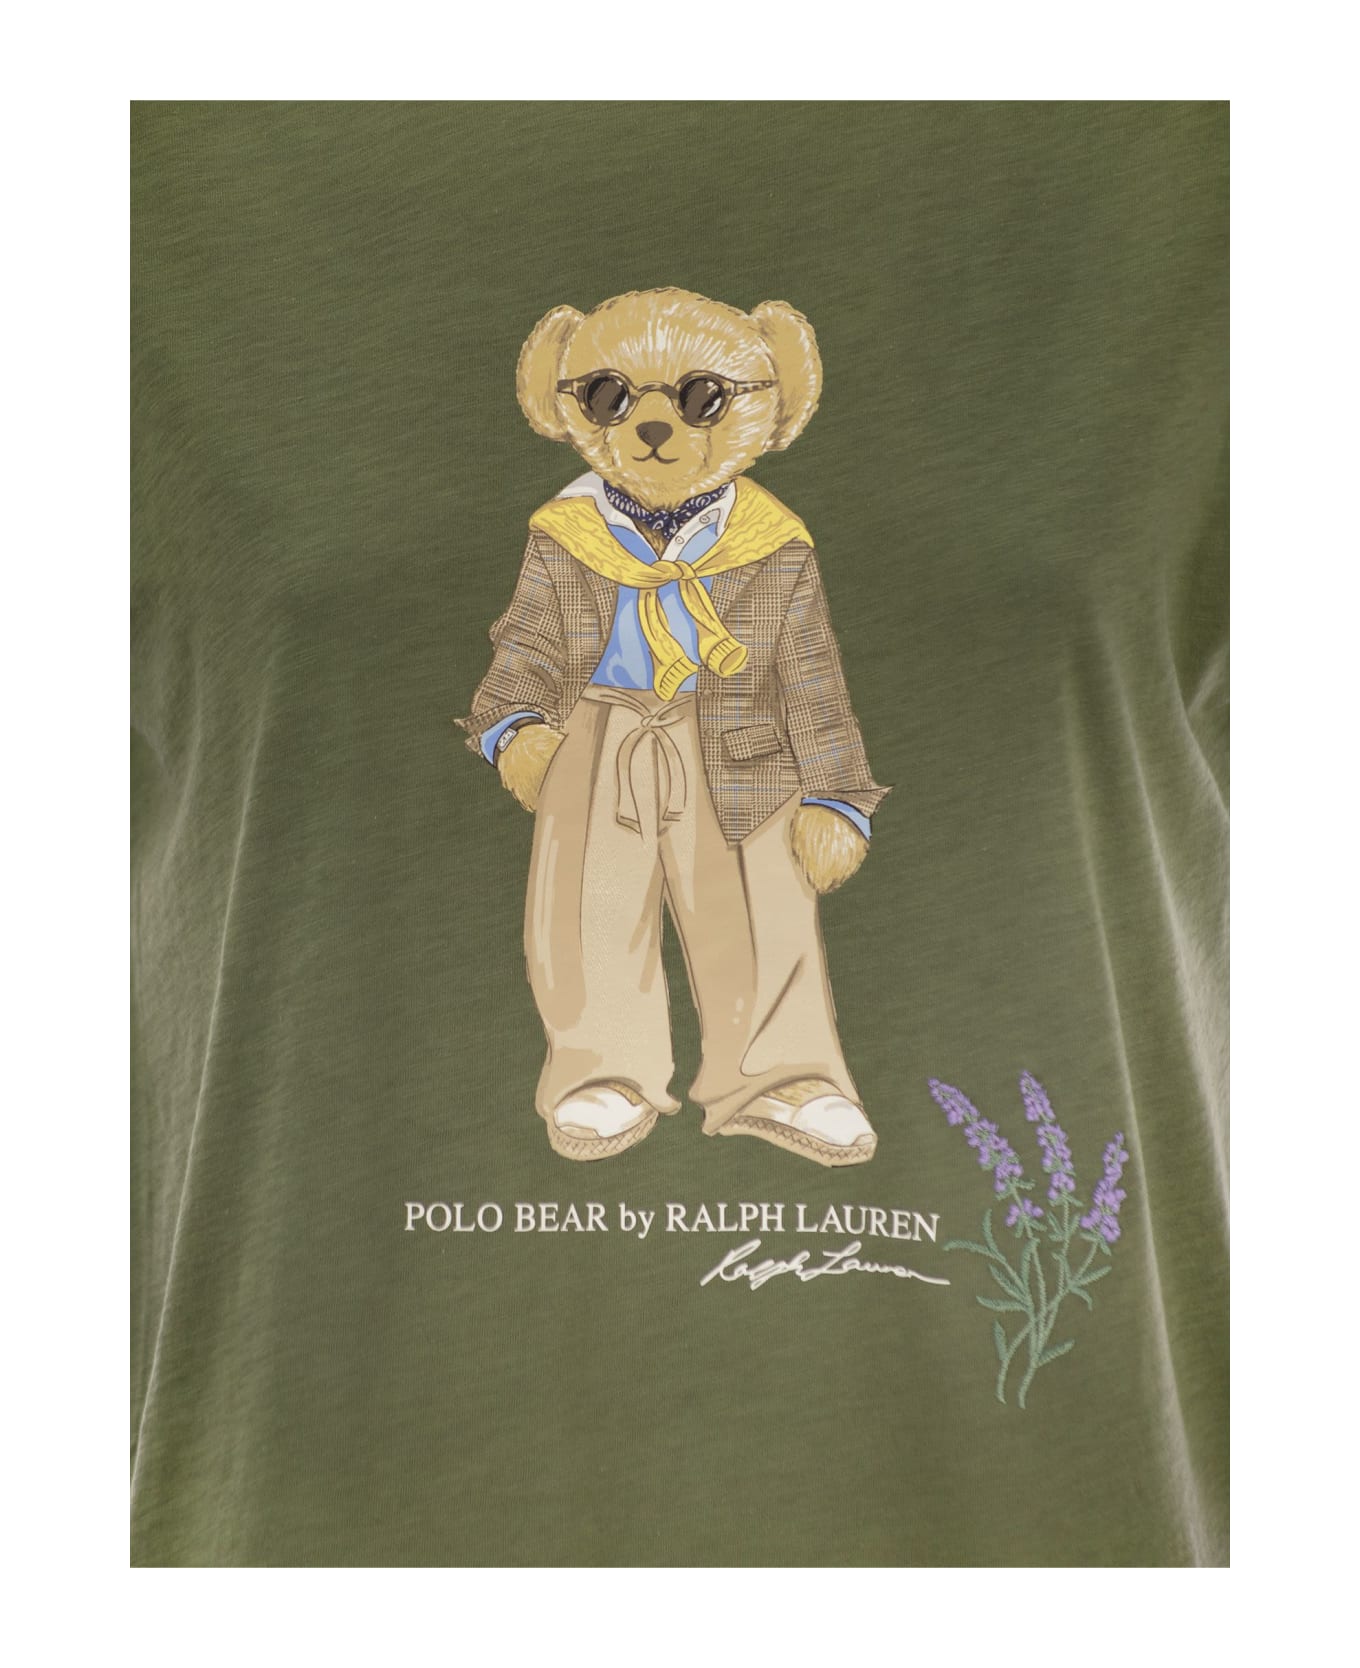 Polo Ralph Lauren Polo Bear Jersey T-shirt - Military Green Tシャツ